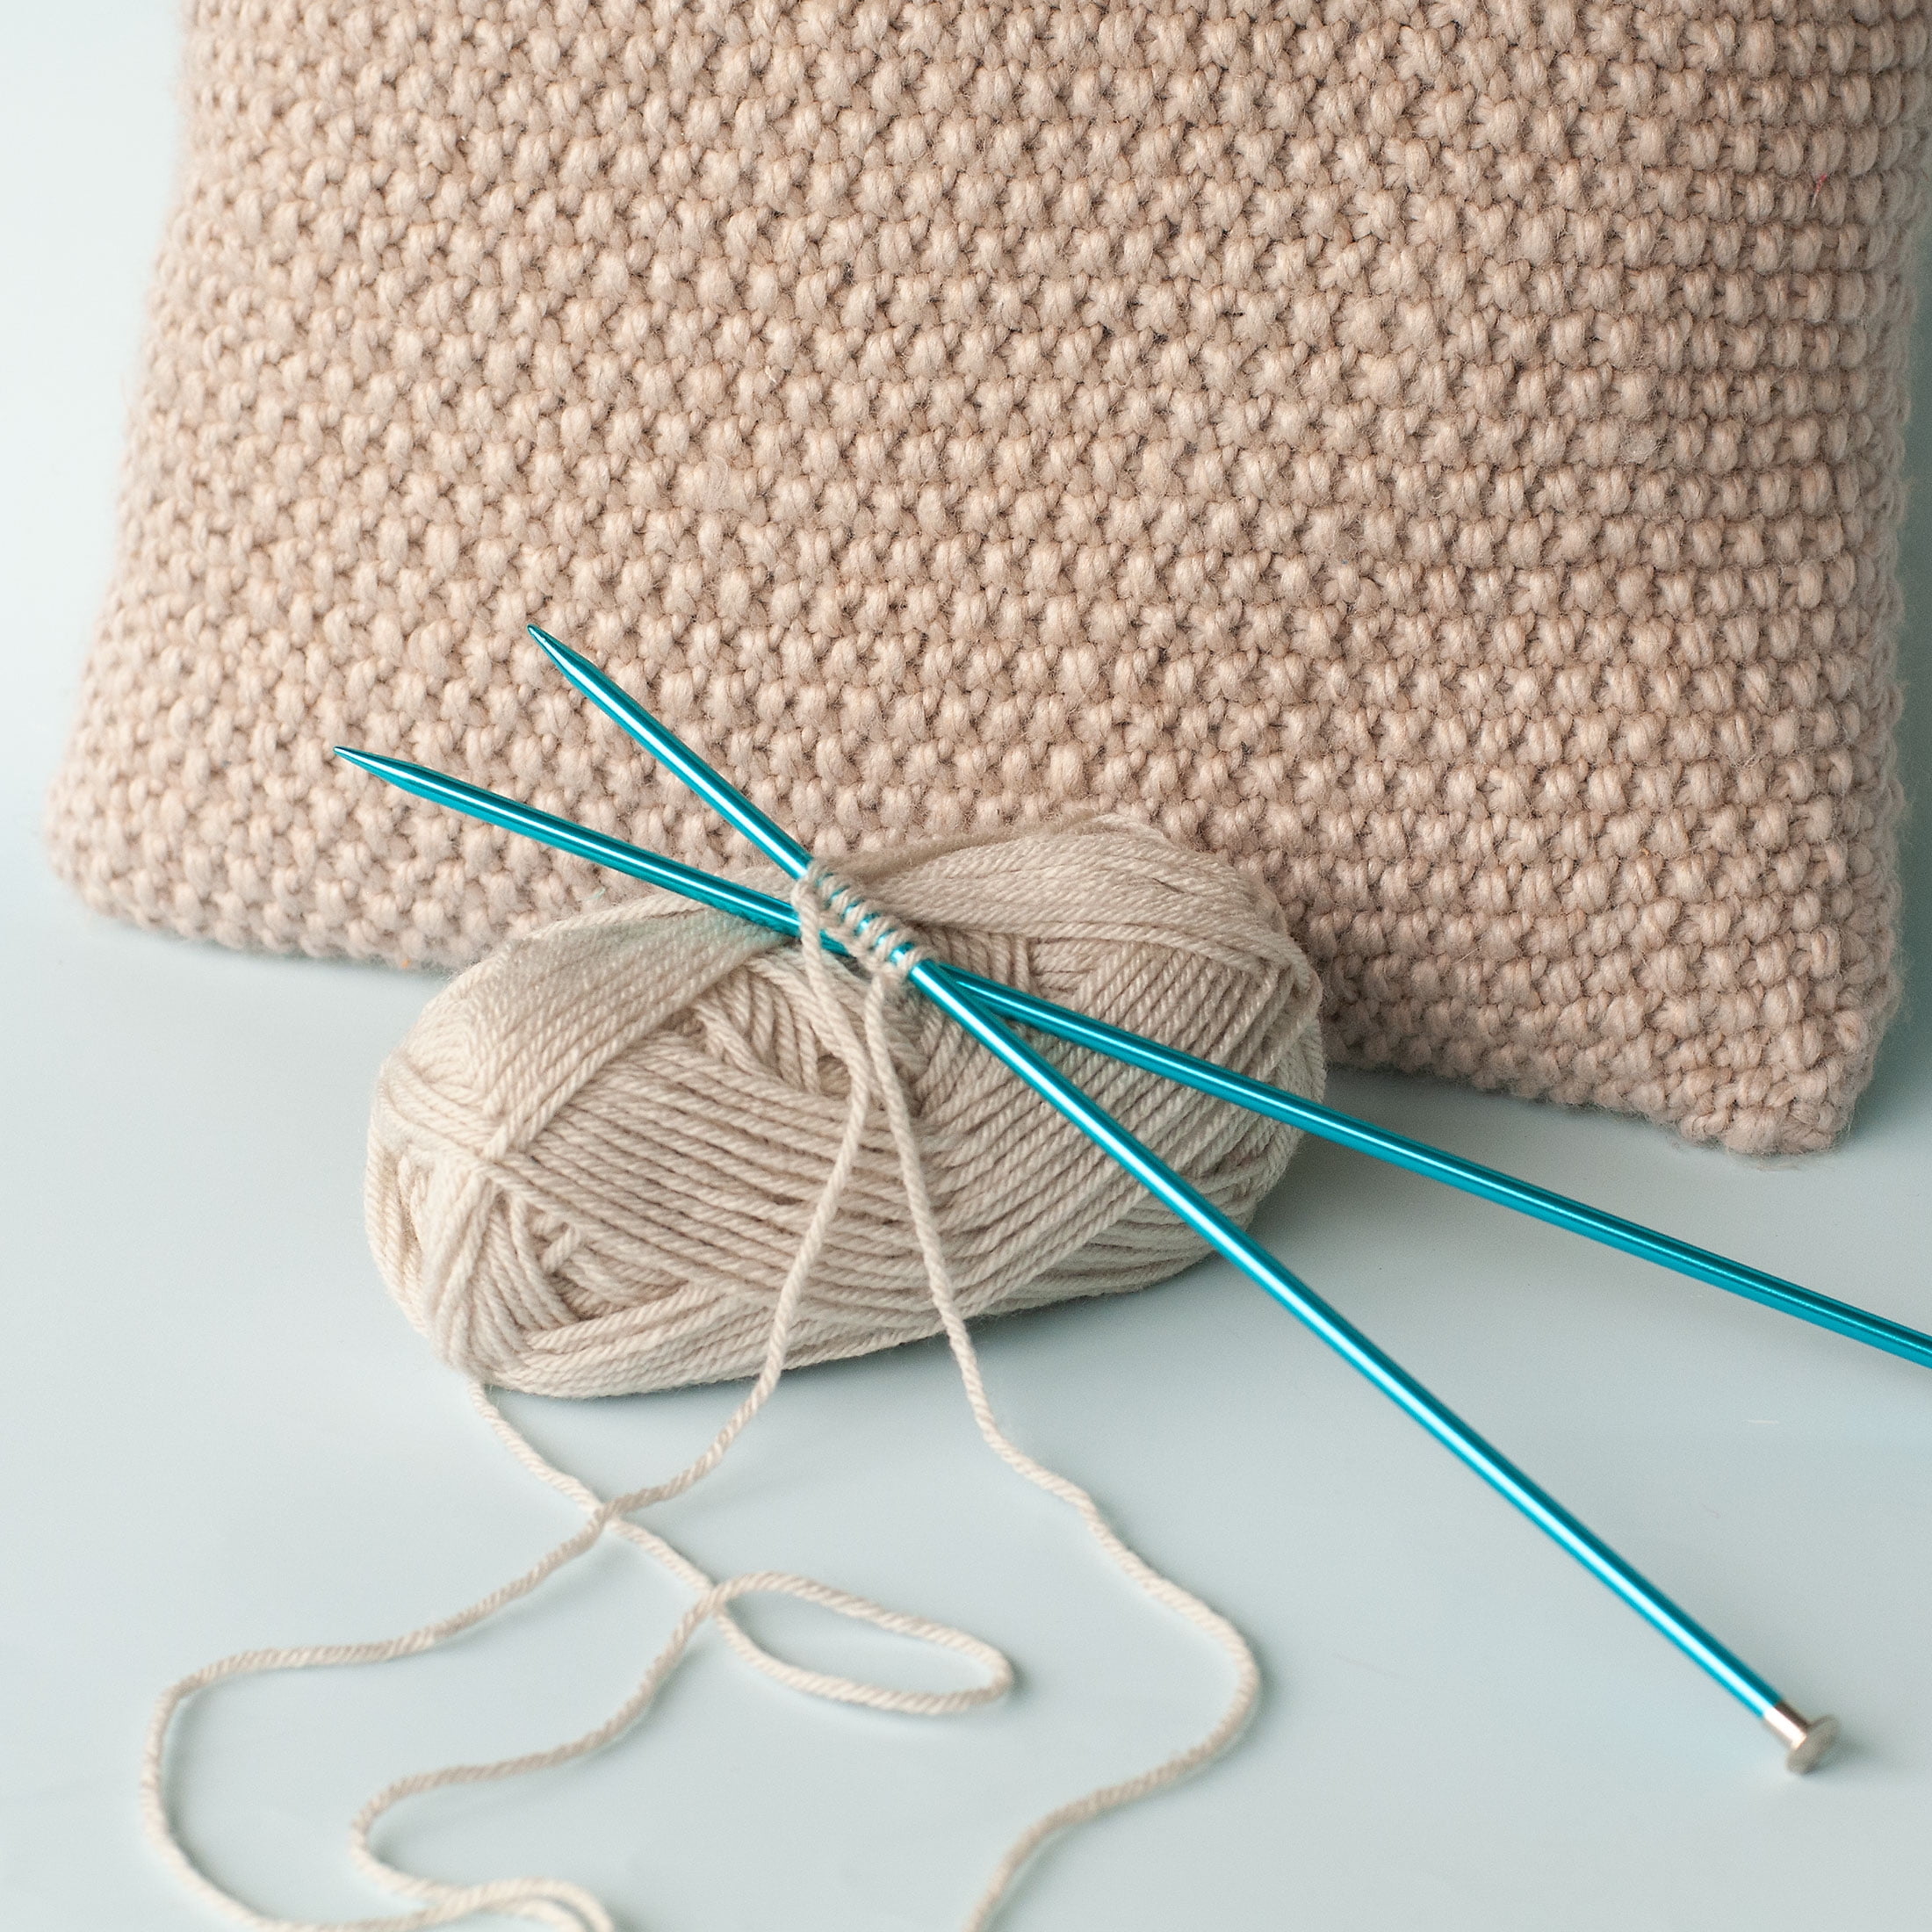 Simplicity Boye 29 in Anodized Aluminum Knitting Circular Needles, Size 10  